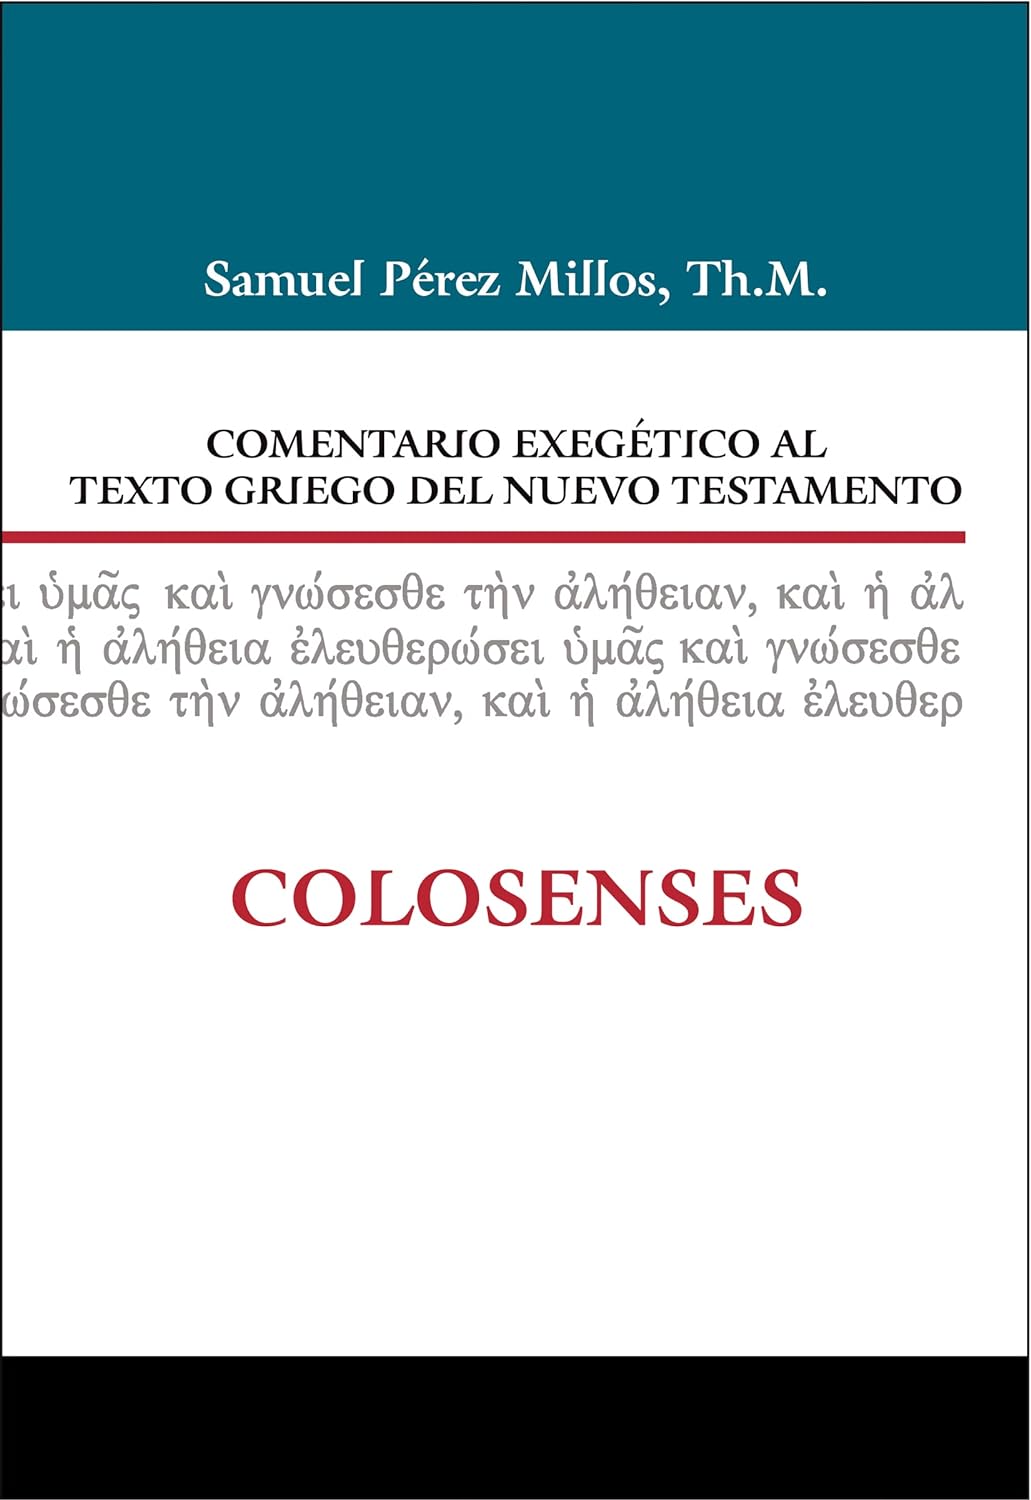 Comentario exegetico al texto griego Colosenses